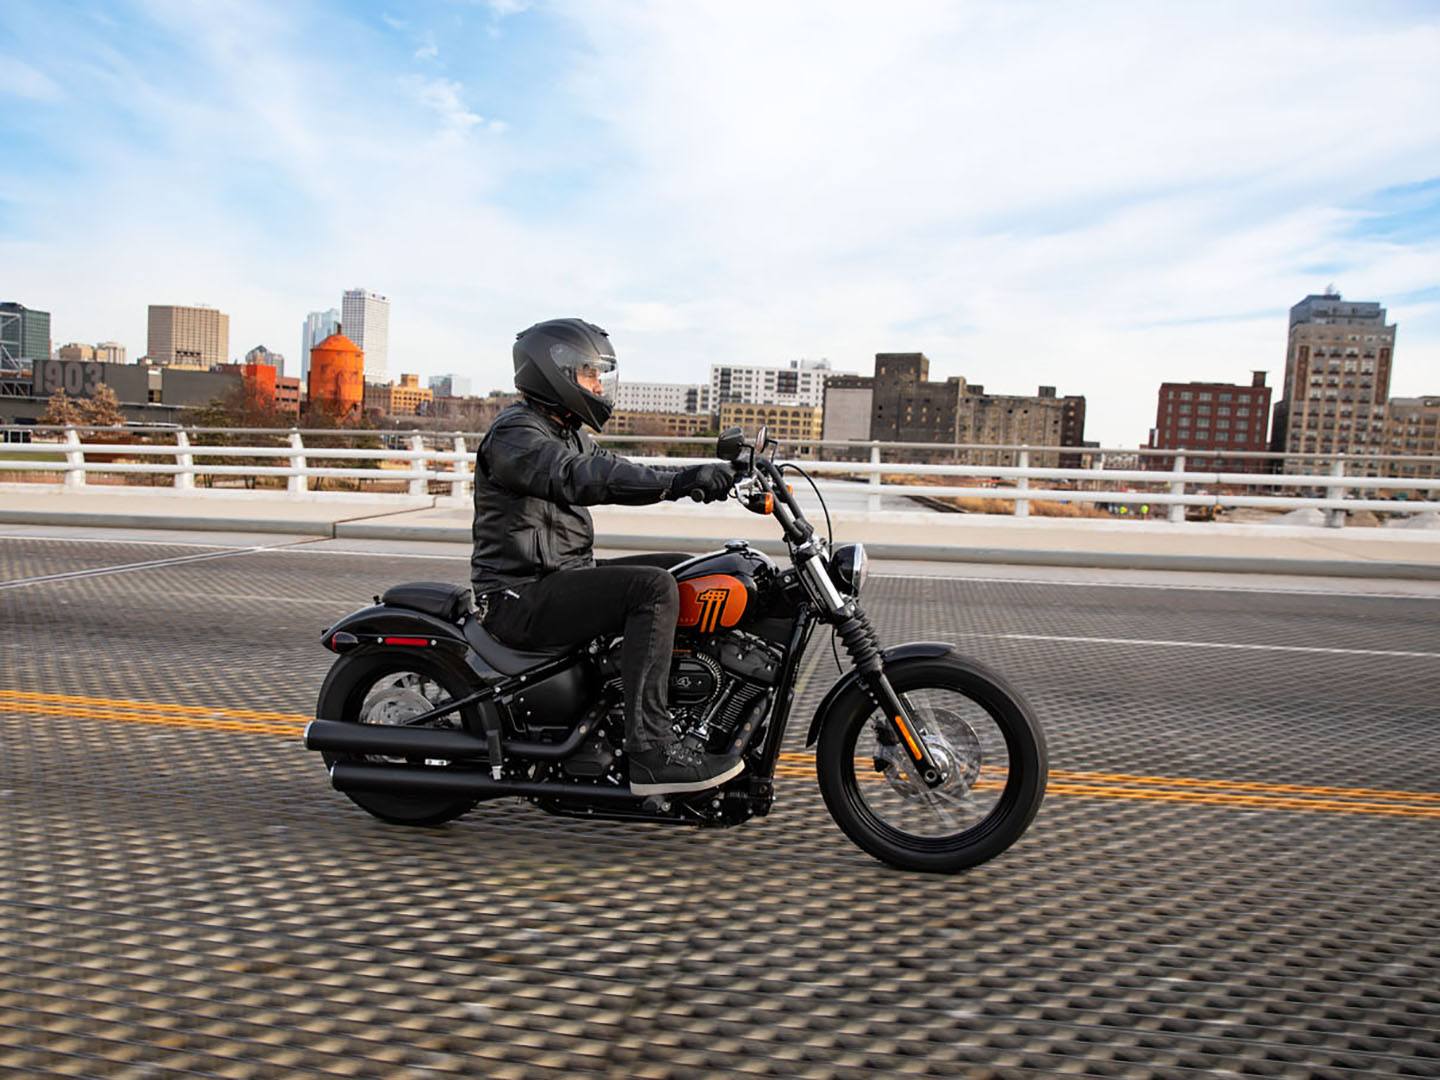 2021 Harley-Davidson Street Bob® 114 in Dodge City, Kansas - Photo 8